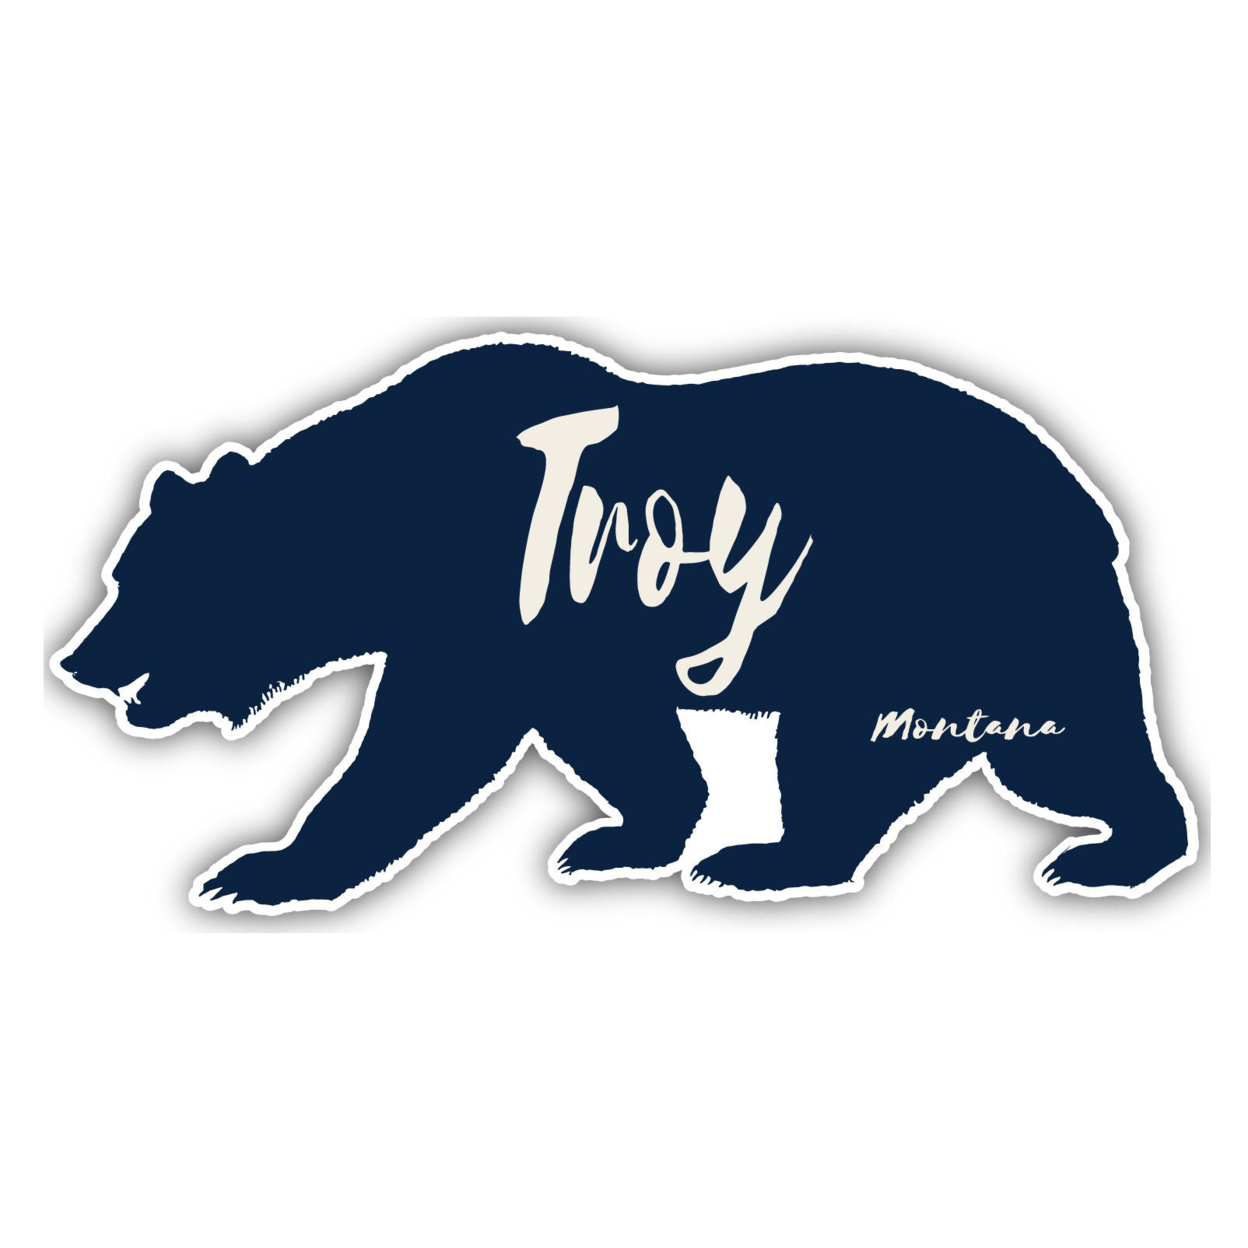 Troy Montana Souvenir Decorative Stickers (Choose Theme And Size) - Single Unit, 2-Inch, Bear